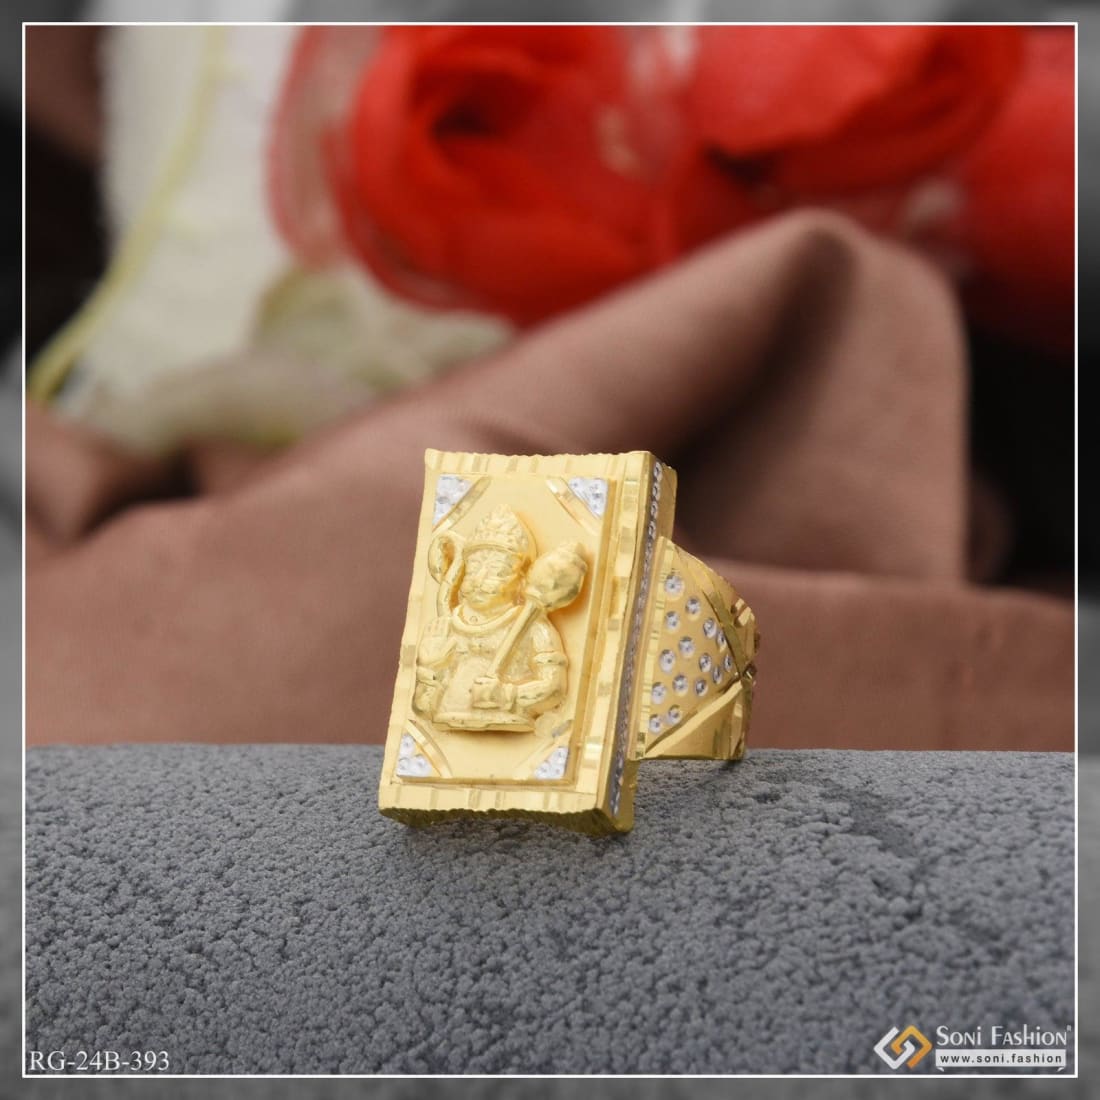 1 gram gold plated hanumanji chic design superior quality ring style b393 soni fashion 875